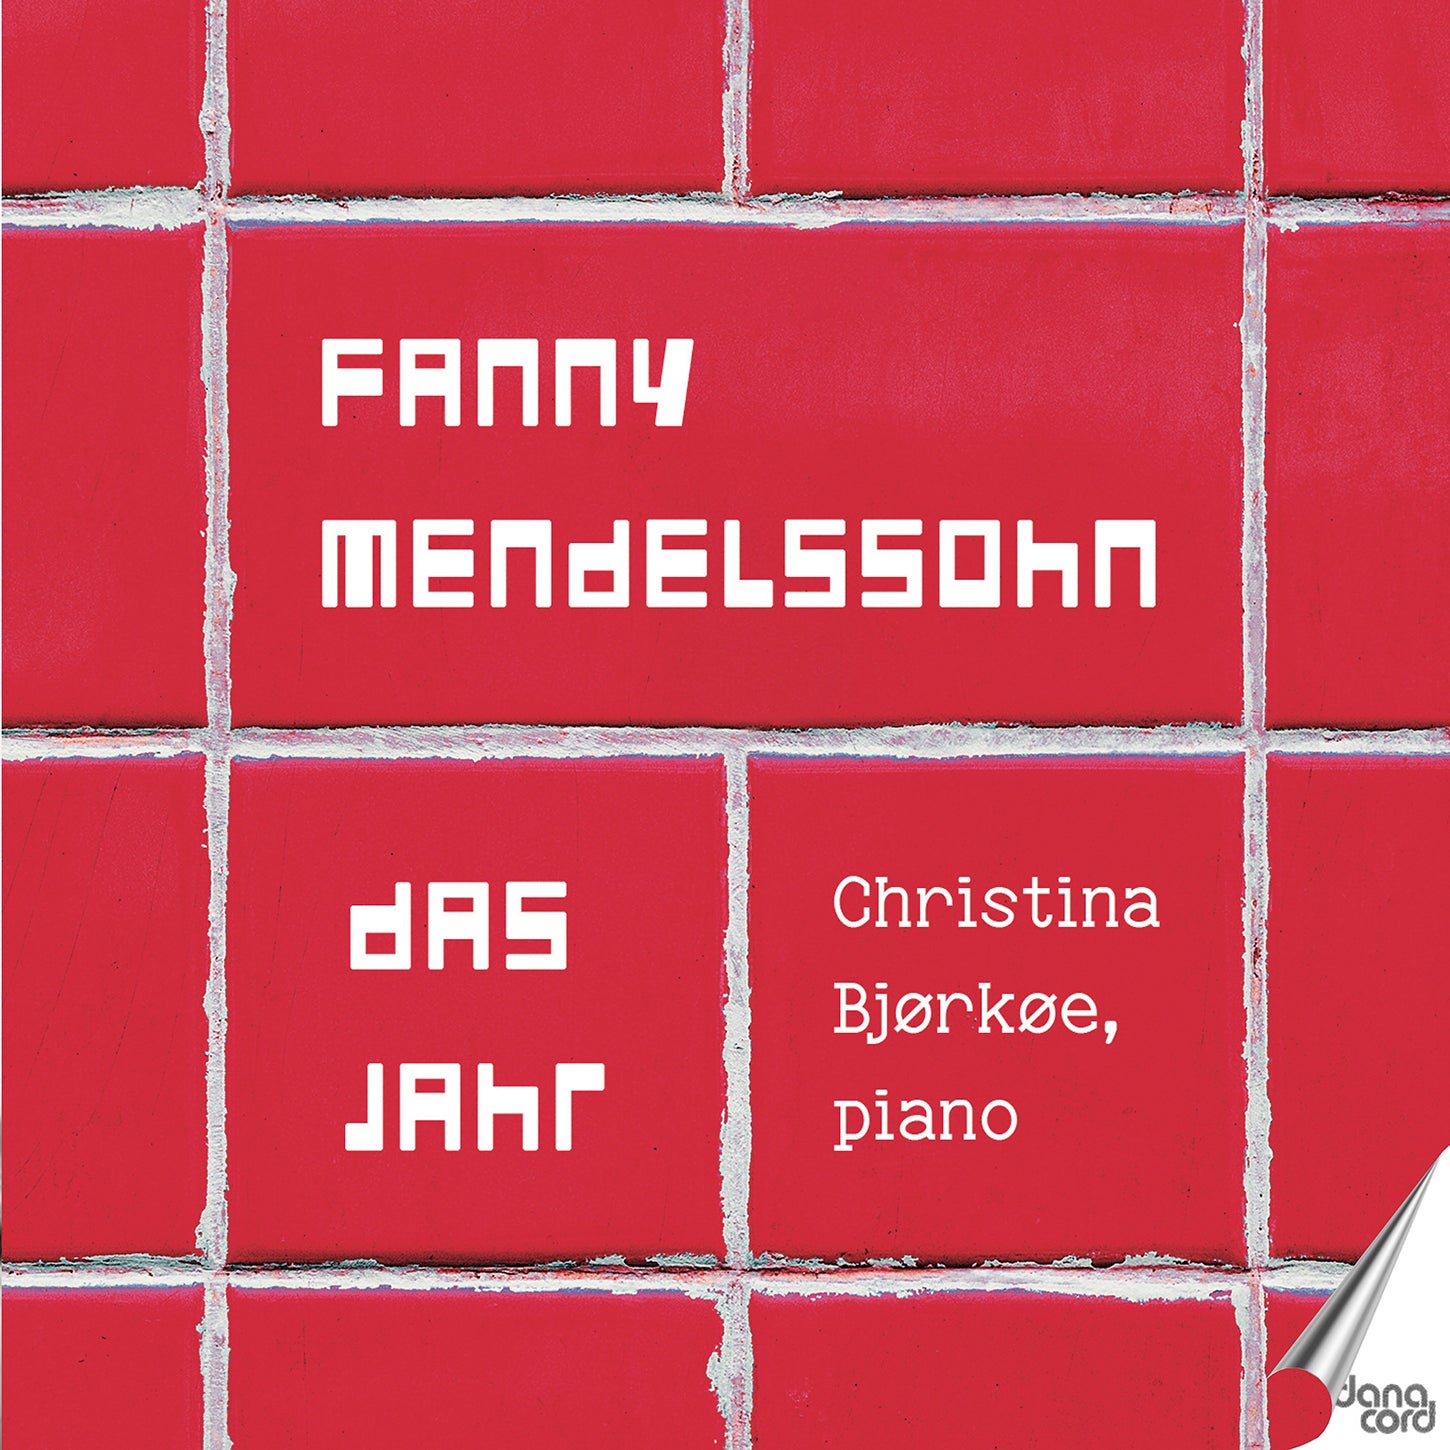 Fanny Mendelssohn Hensel: Das Jahr - 12 Character Pieces for Piano / Bjørkøe